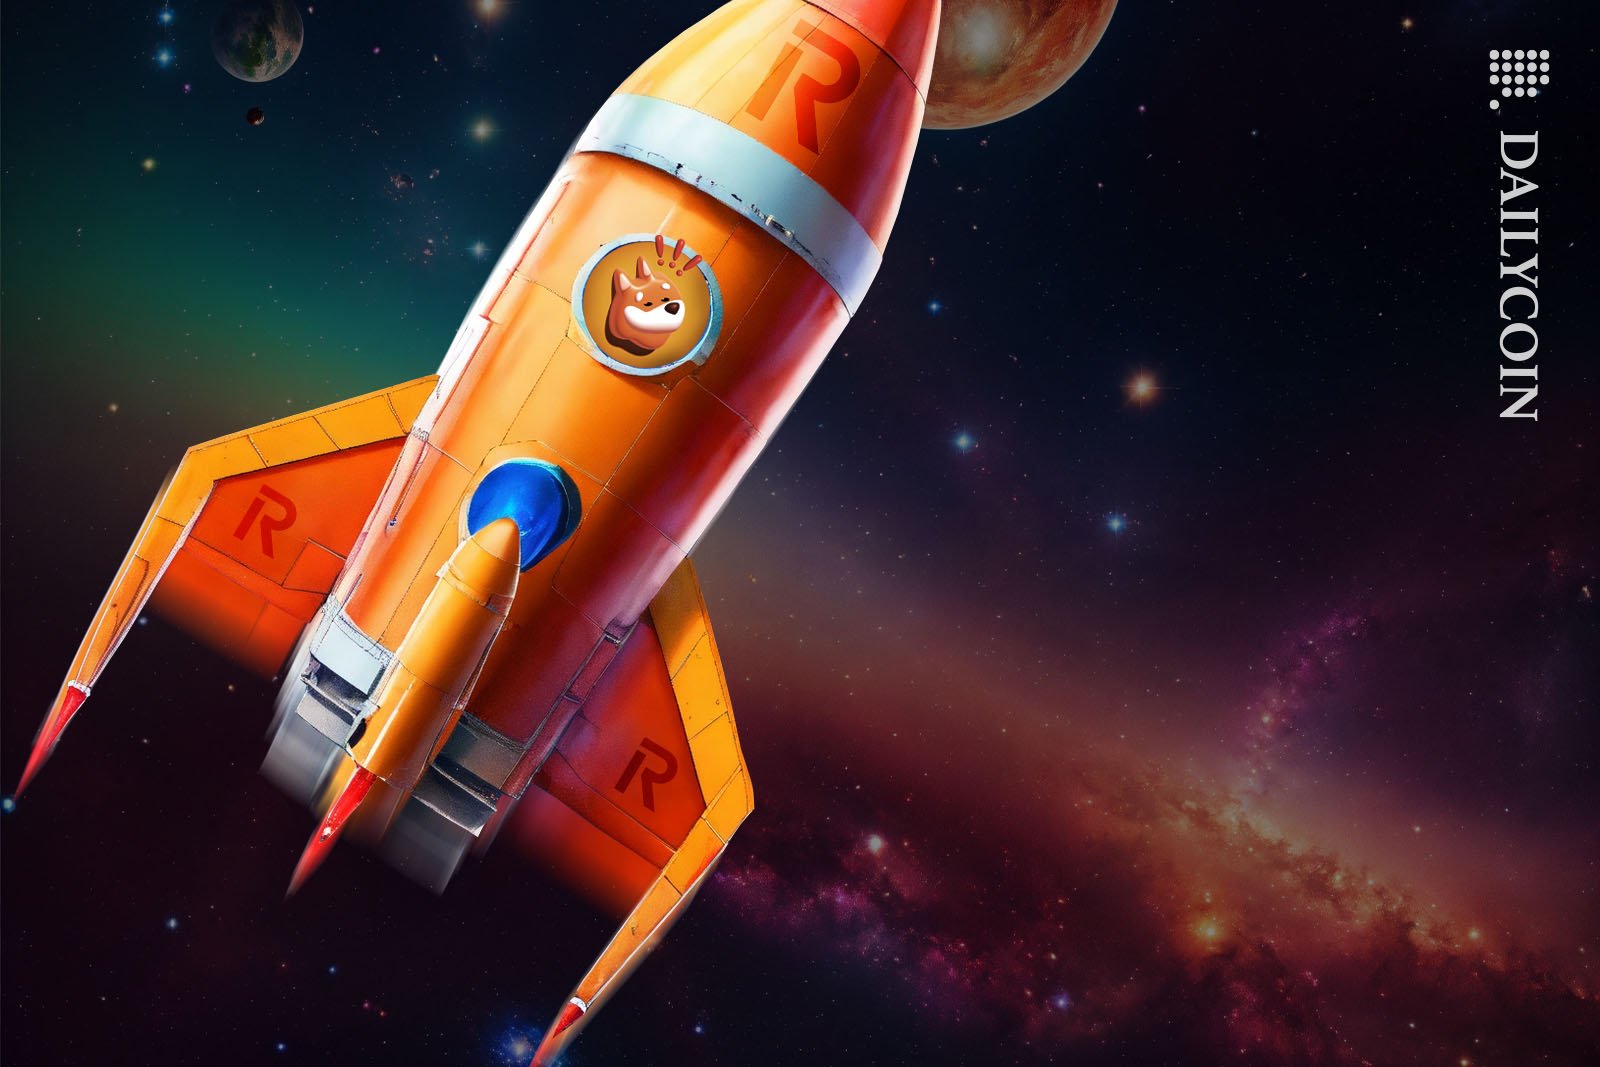 BONK dog flying in a Revolut branded rocket in space.